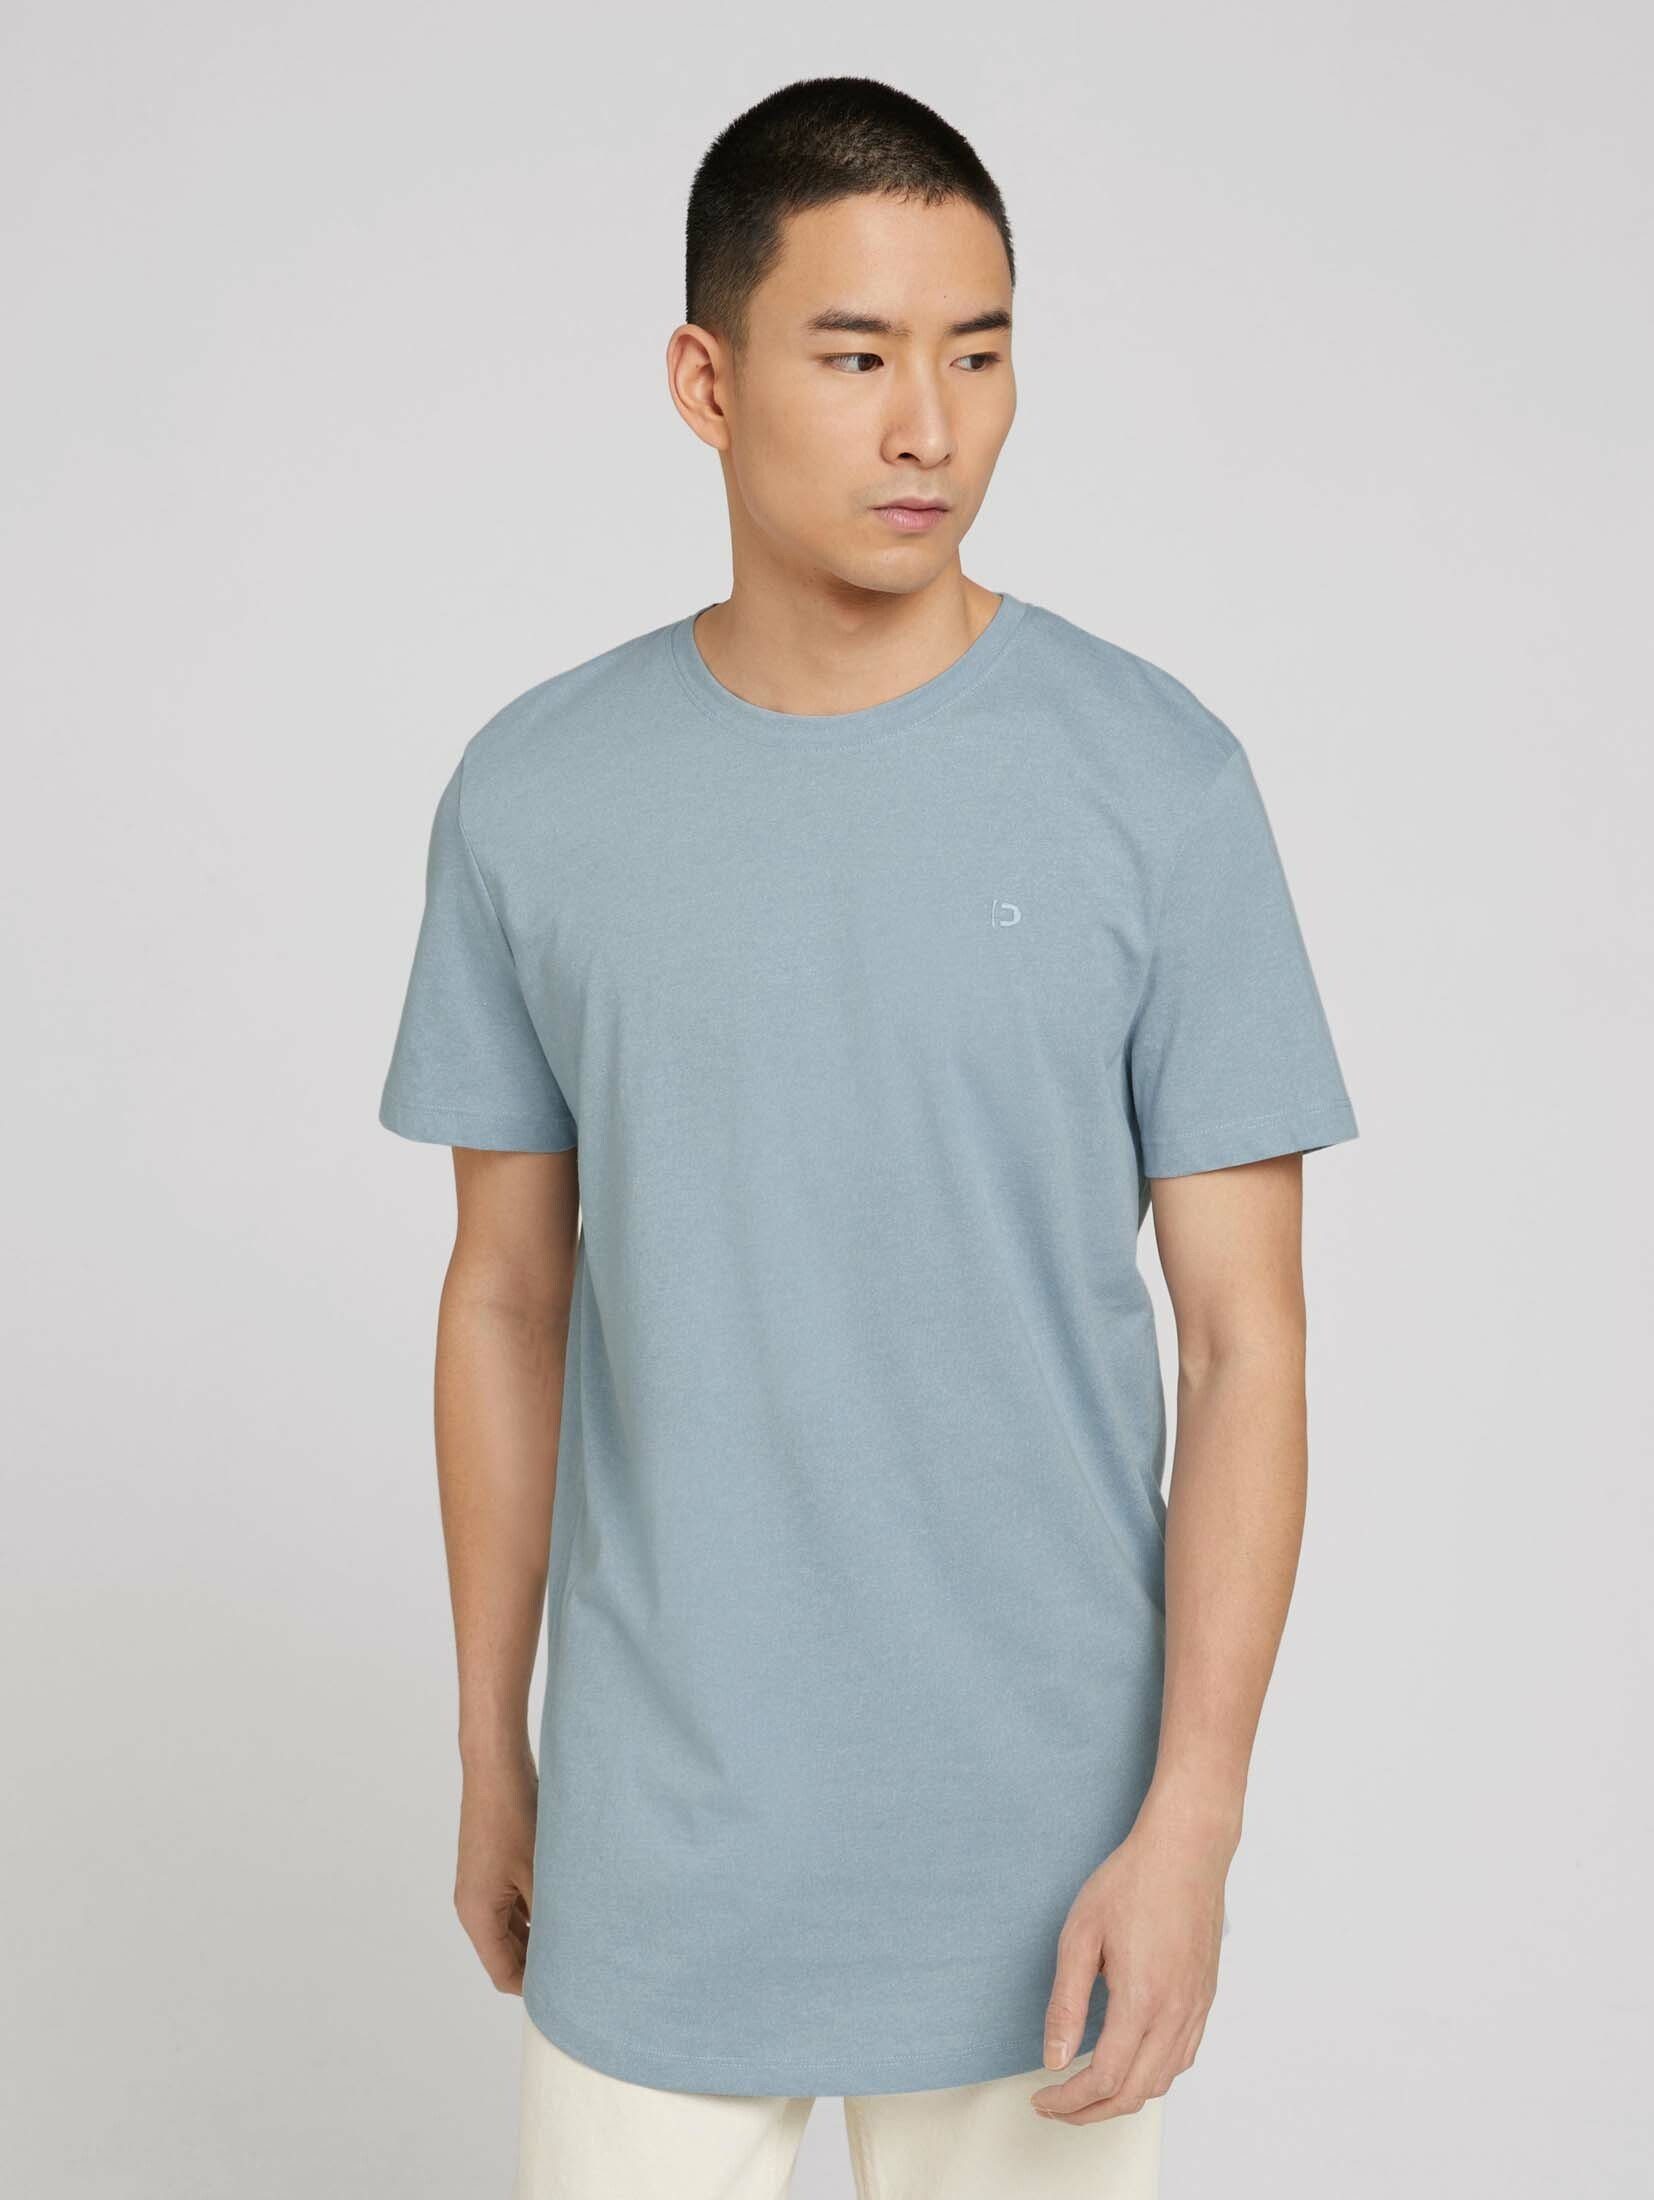 TOM TAILOR Denim T-Shirt melange blue mit Saum abgerundetem foggy T-Shirt